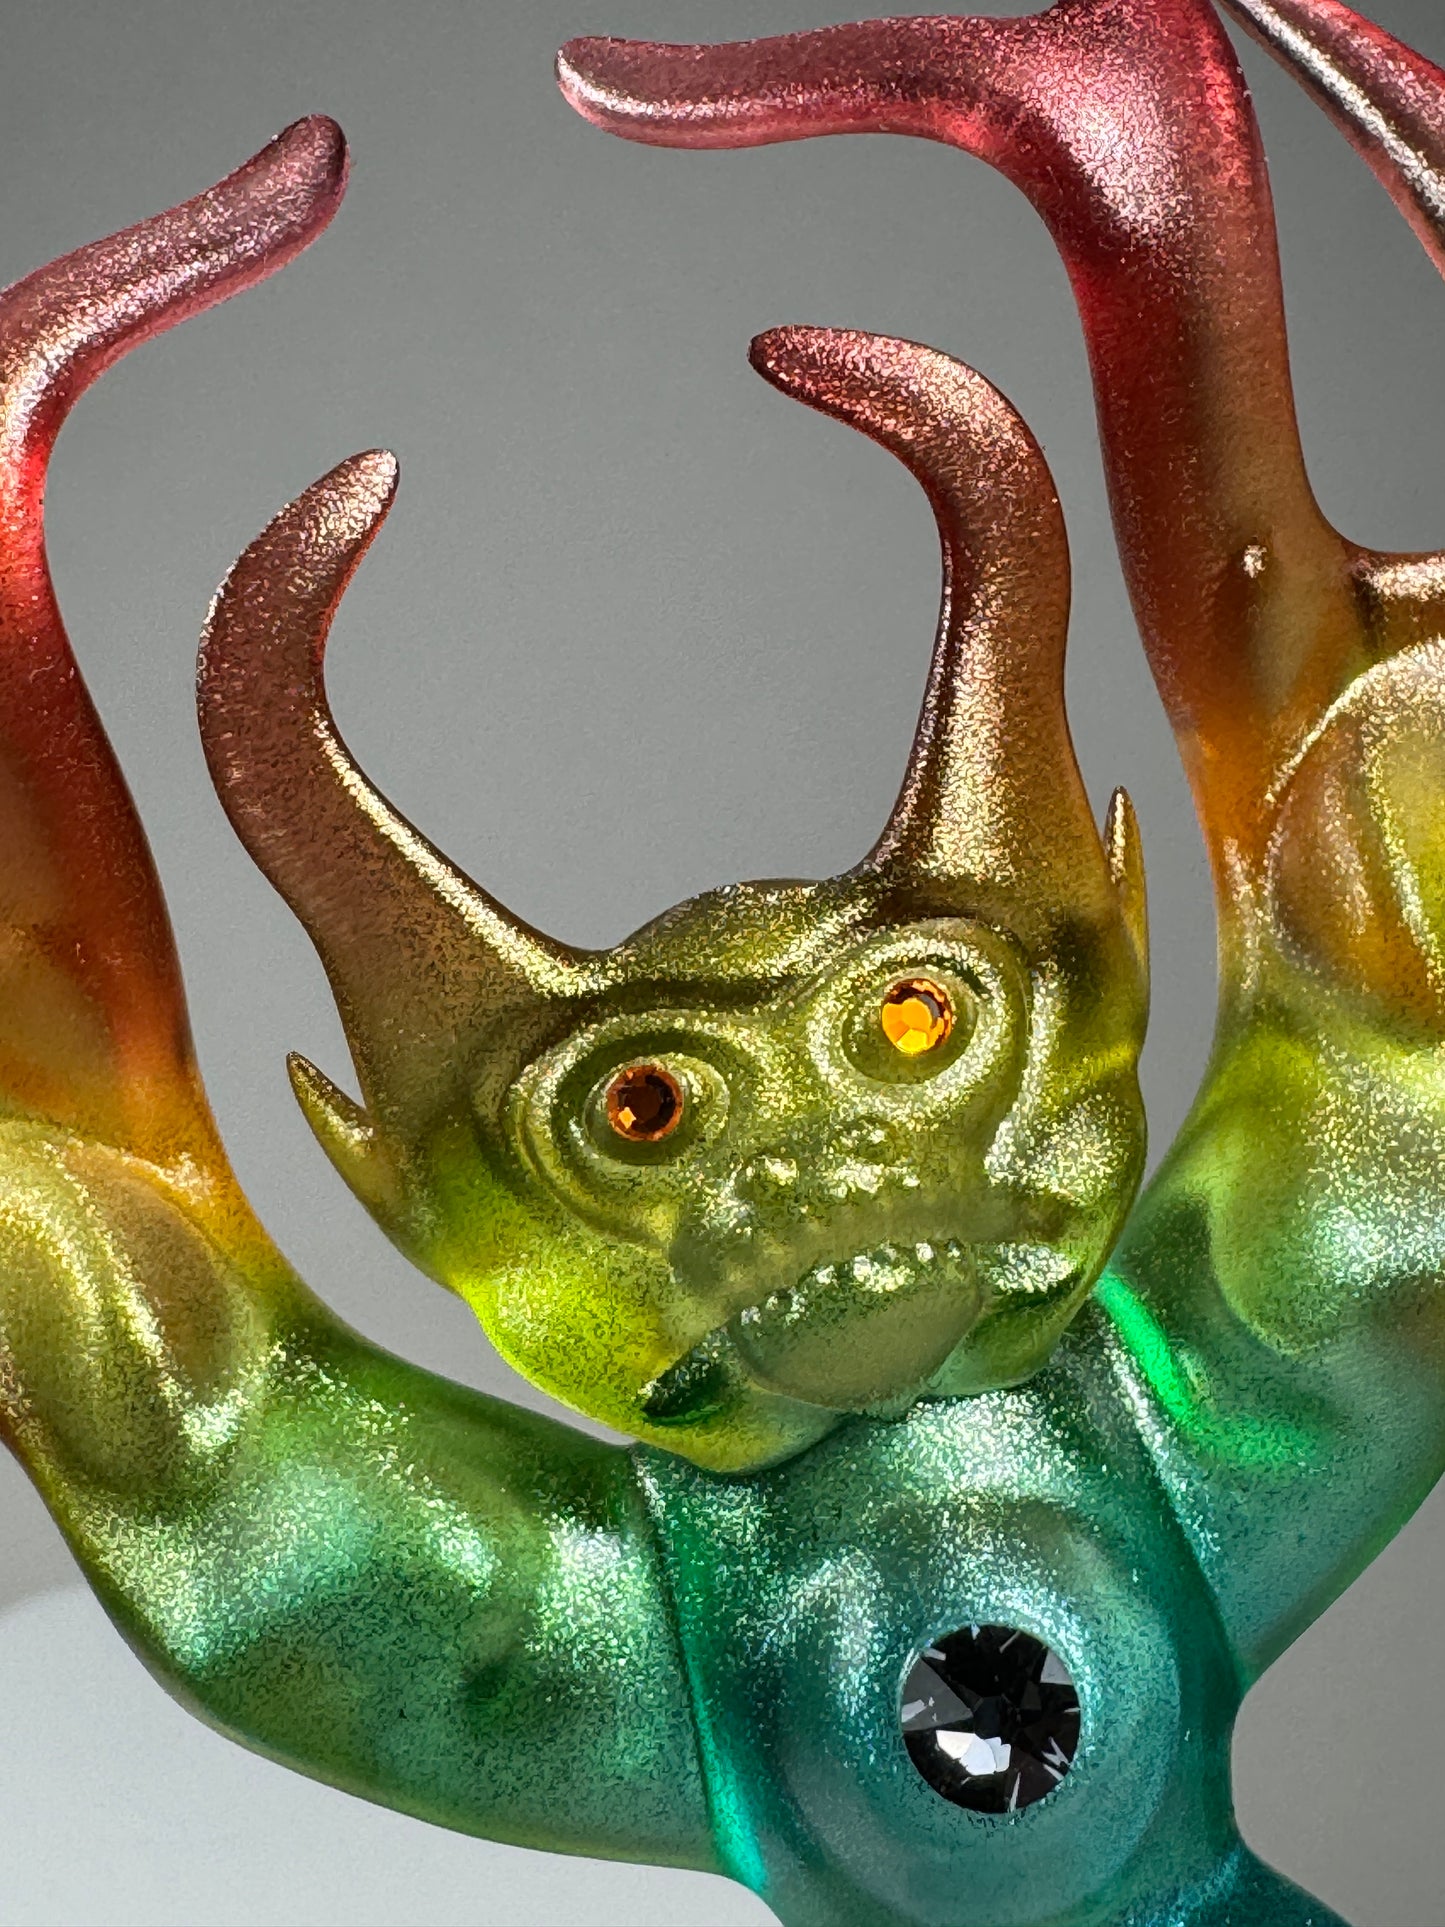 Antler Arms Beast: Transparent Rainbow Flake